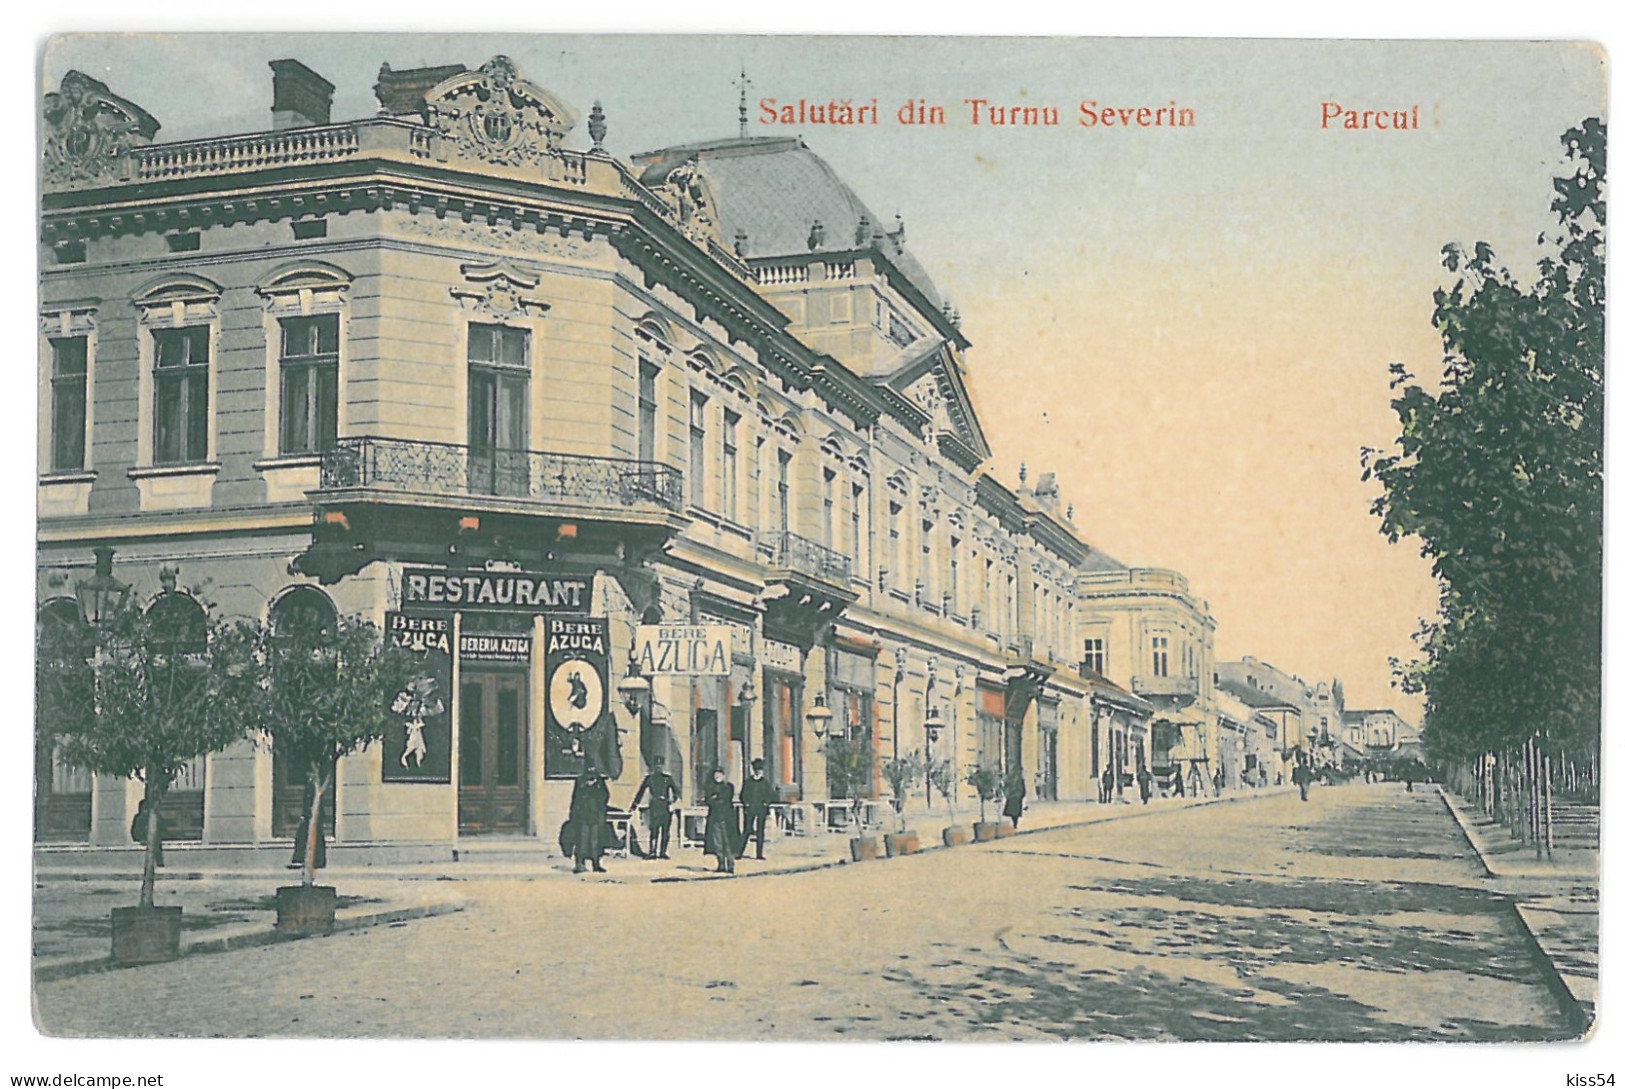 RO 77 - 15063 TURNU SEVERIN, Stores, Park, Romania - Old Postcard - Unused - Rumania